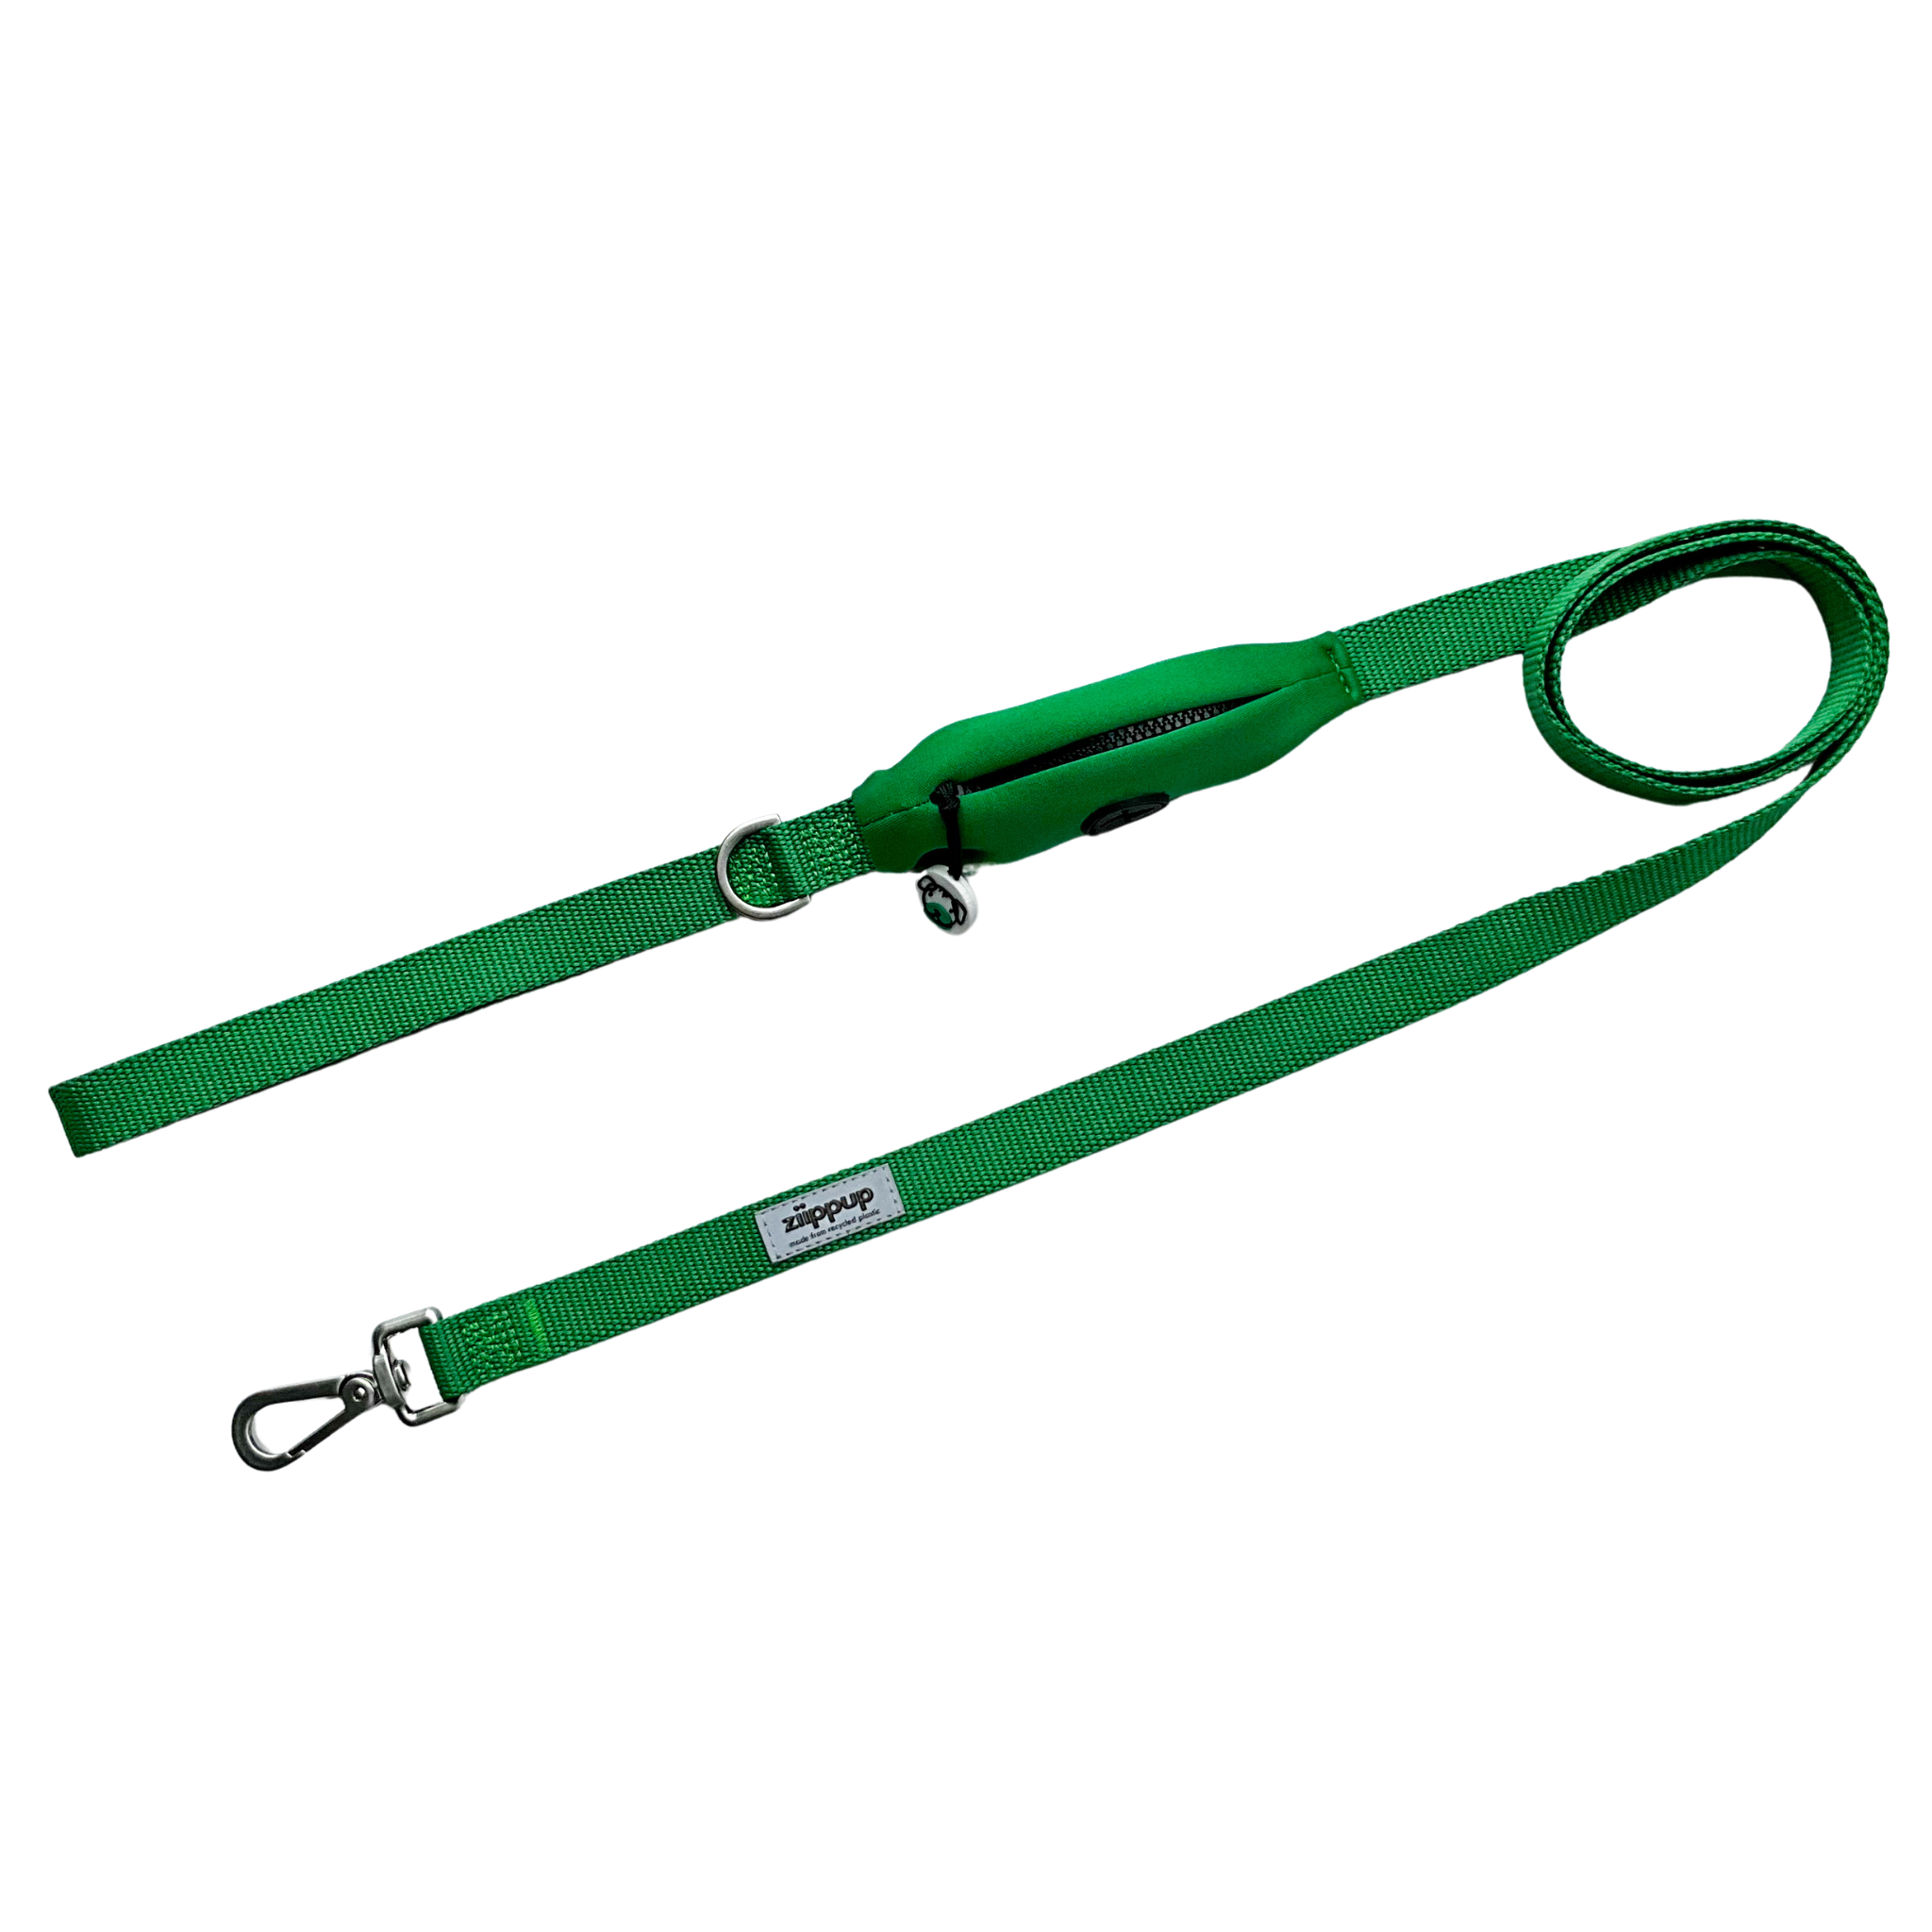 Green dog leash with built in poo bag holder